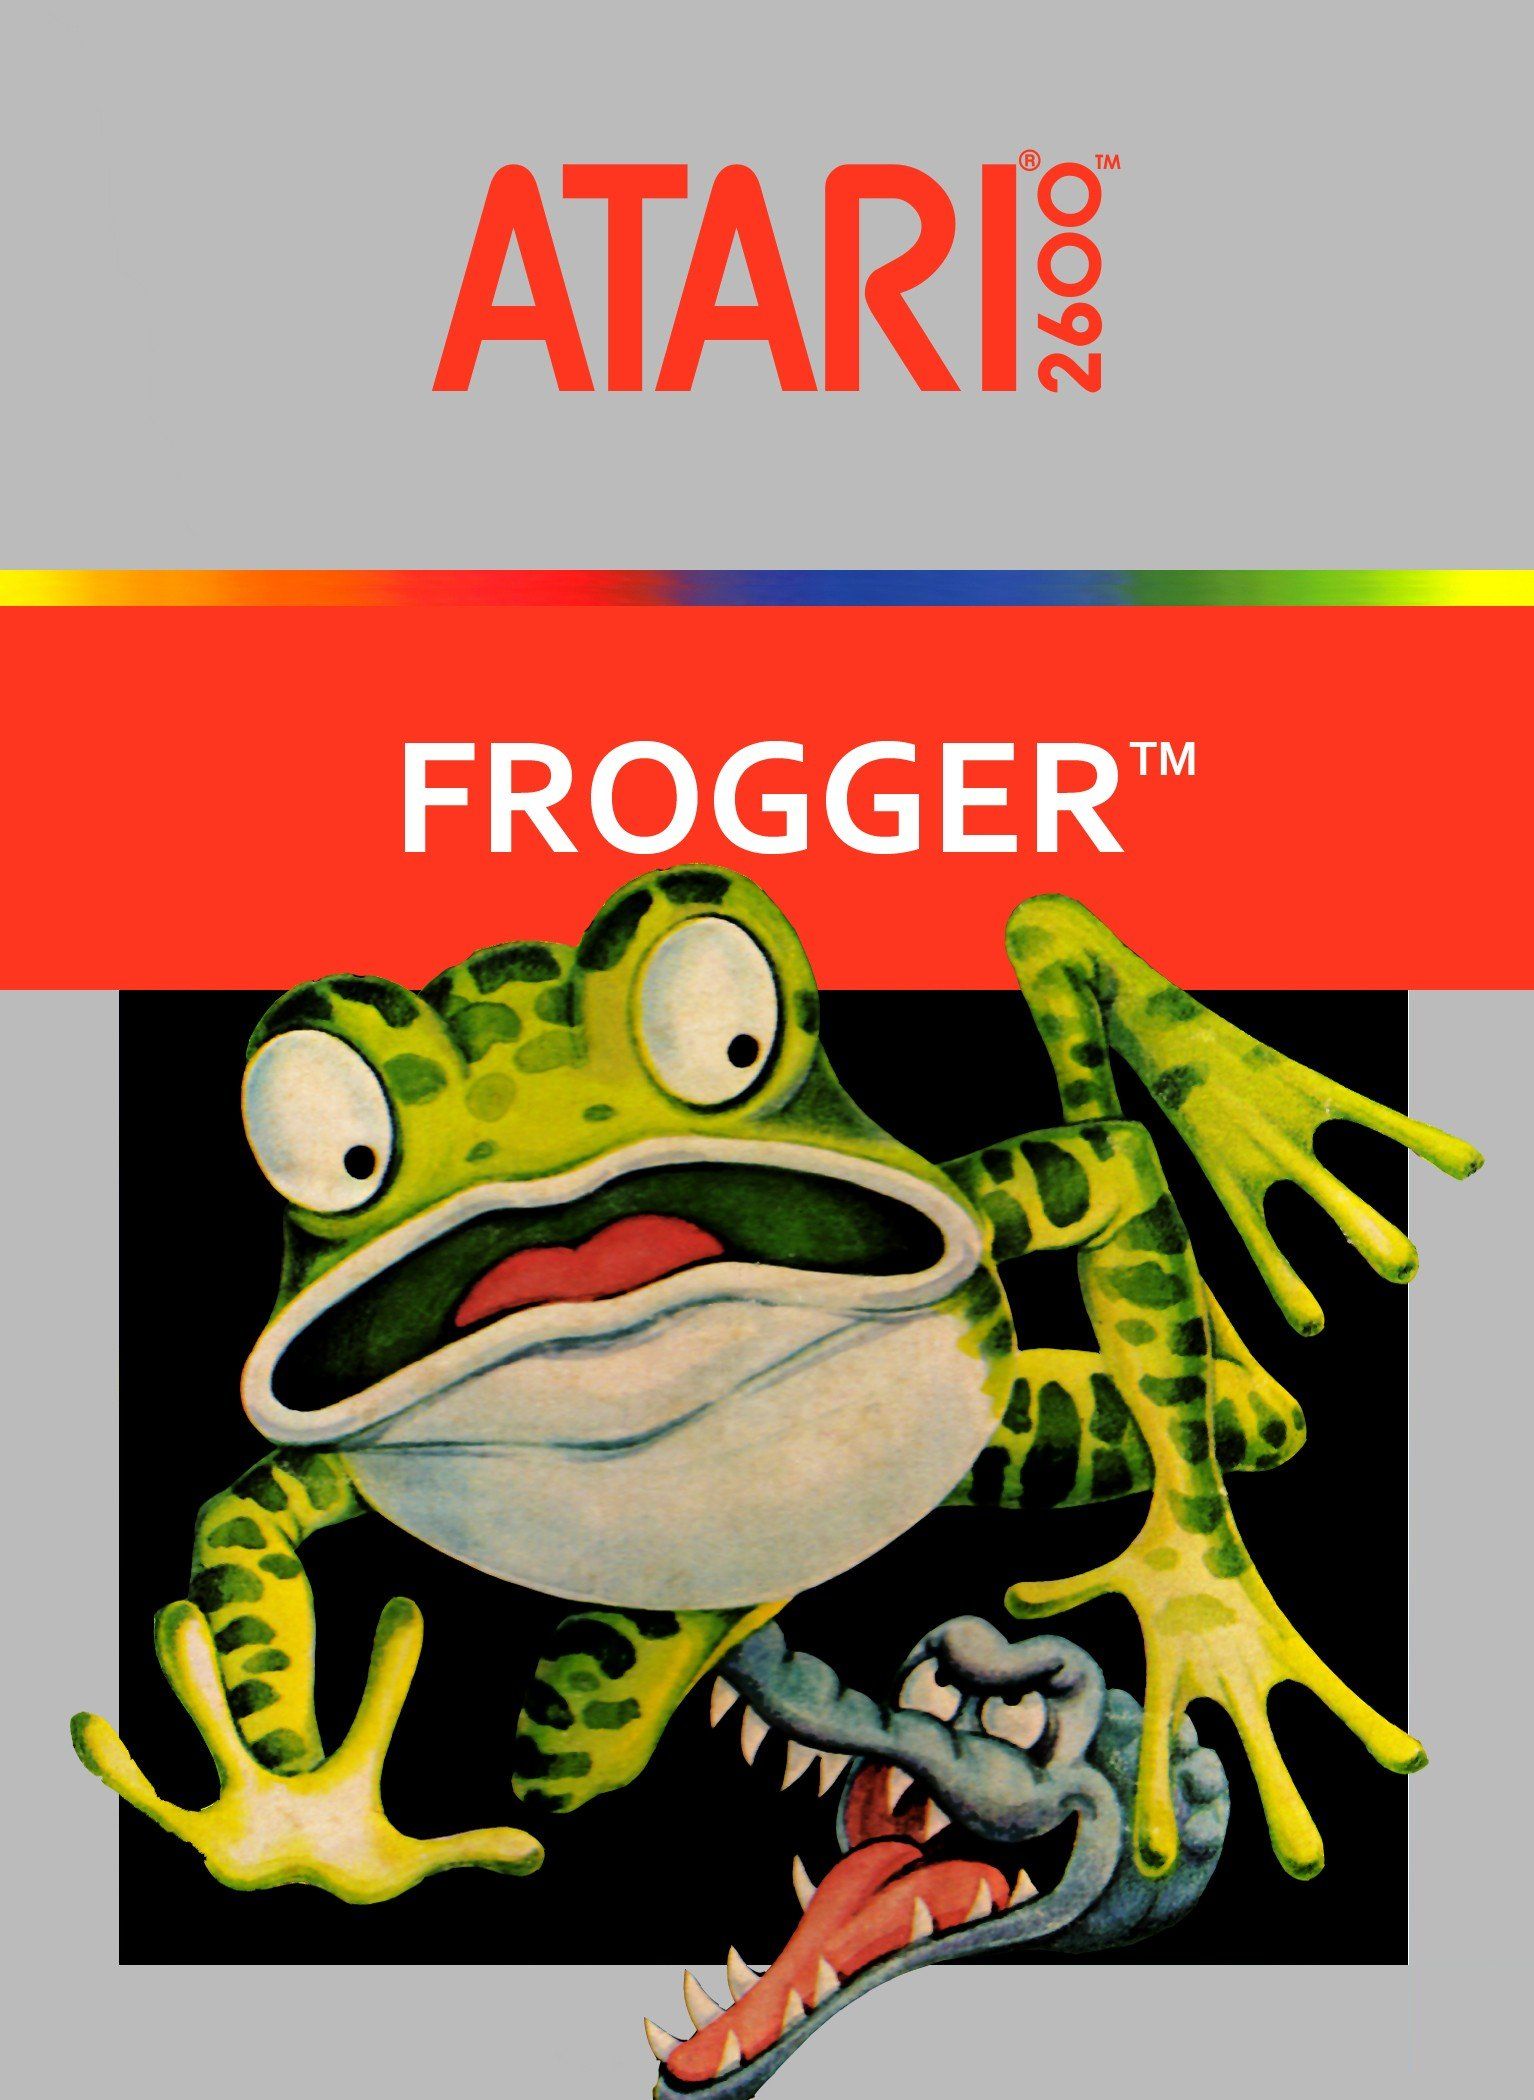 Atari 2600 "Frogger" video game